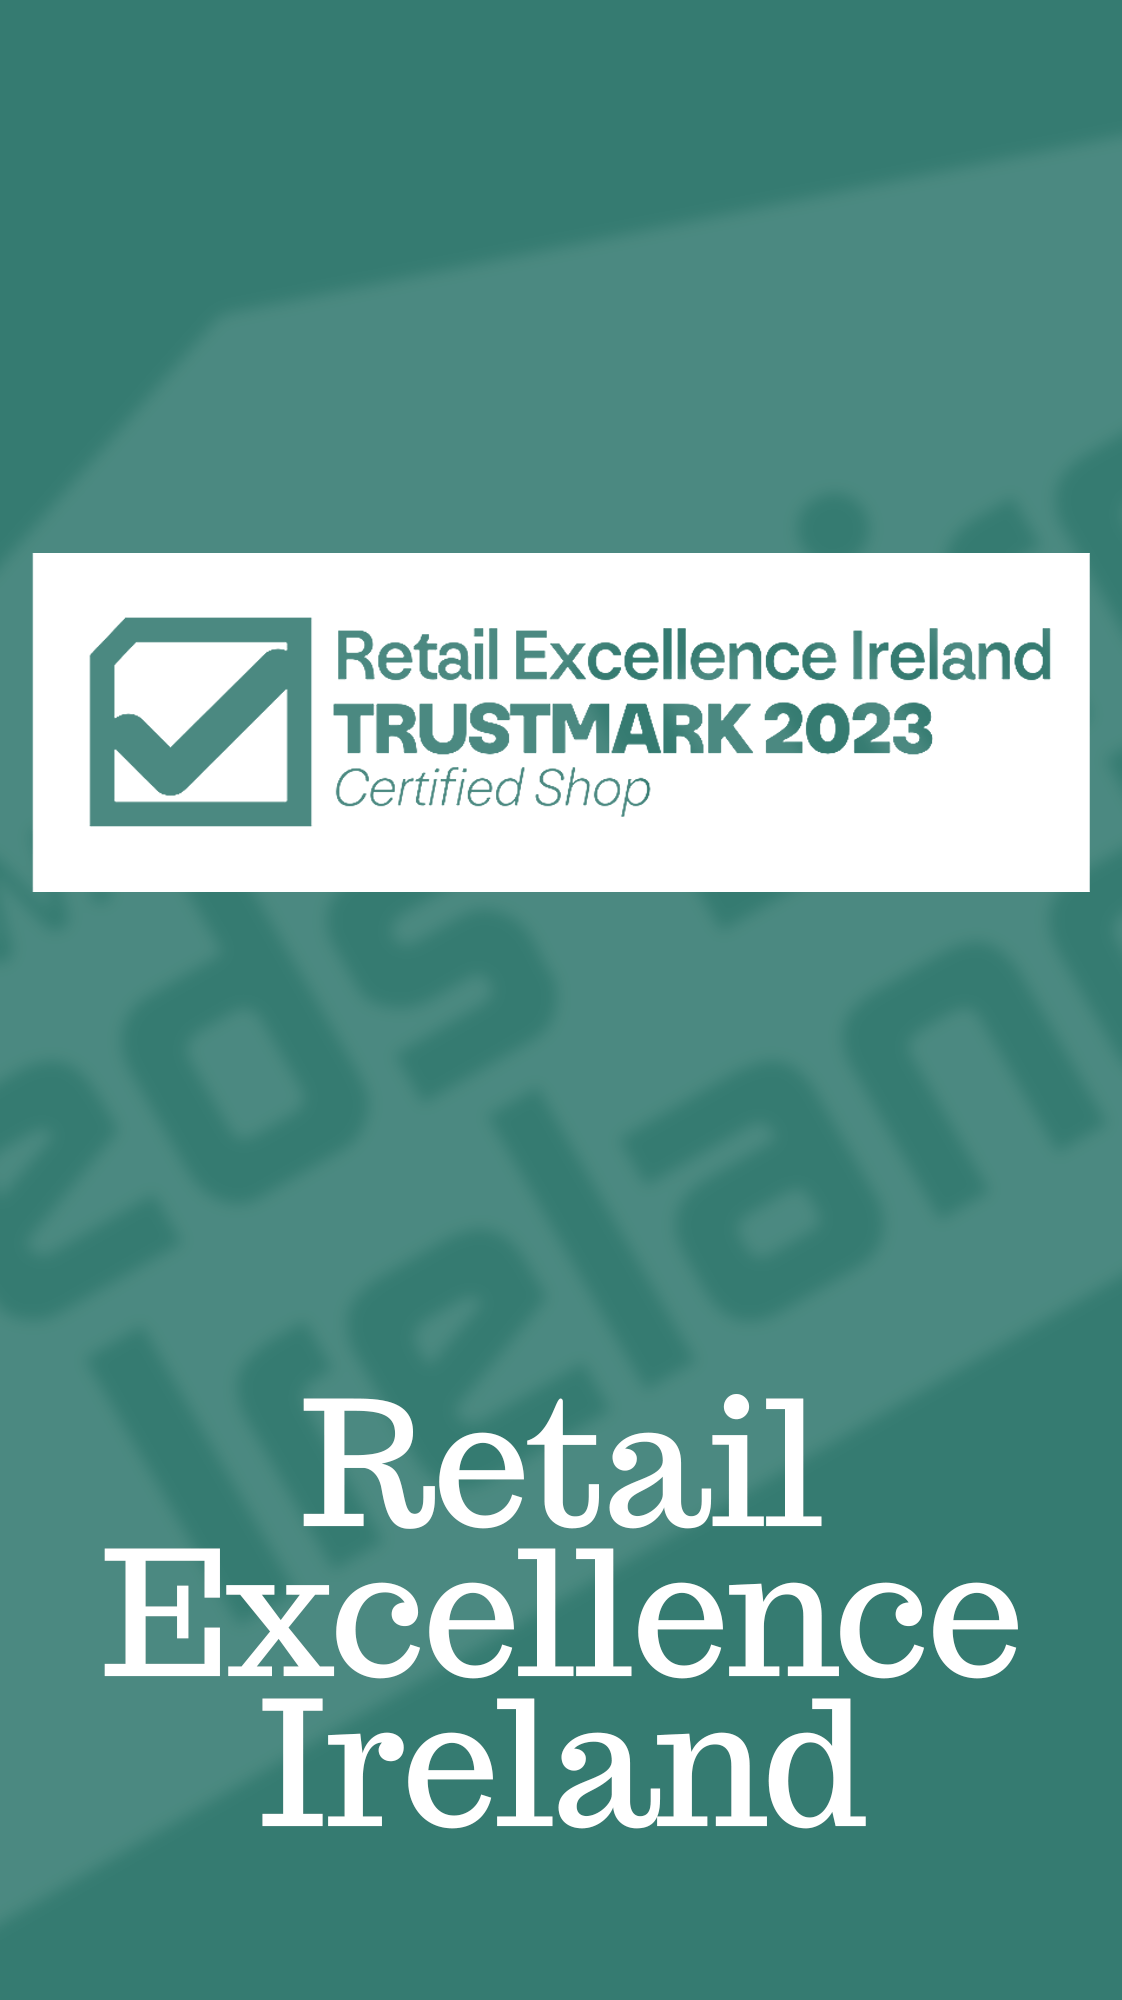 Retail Excellence Ireland Logo on the Sheds Direct Ireland logo